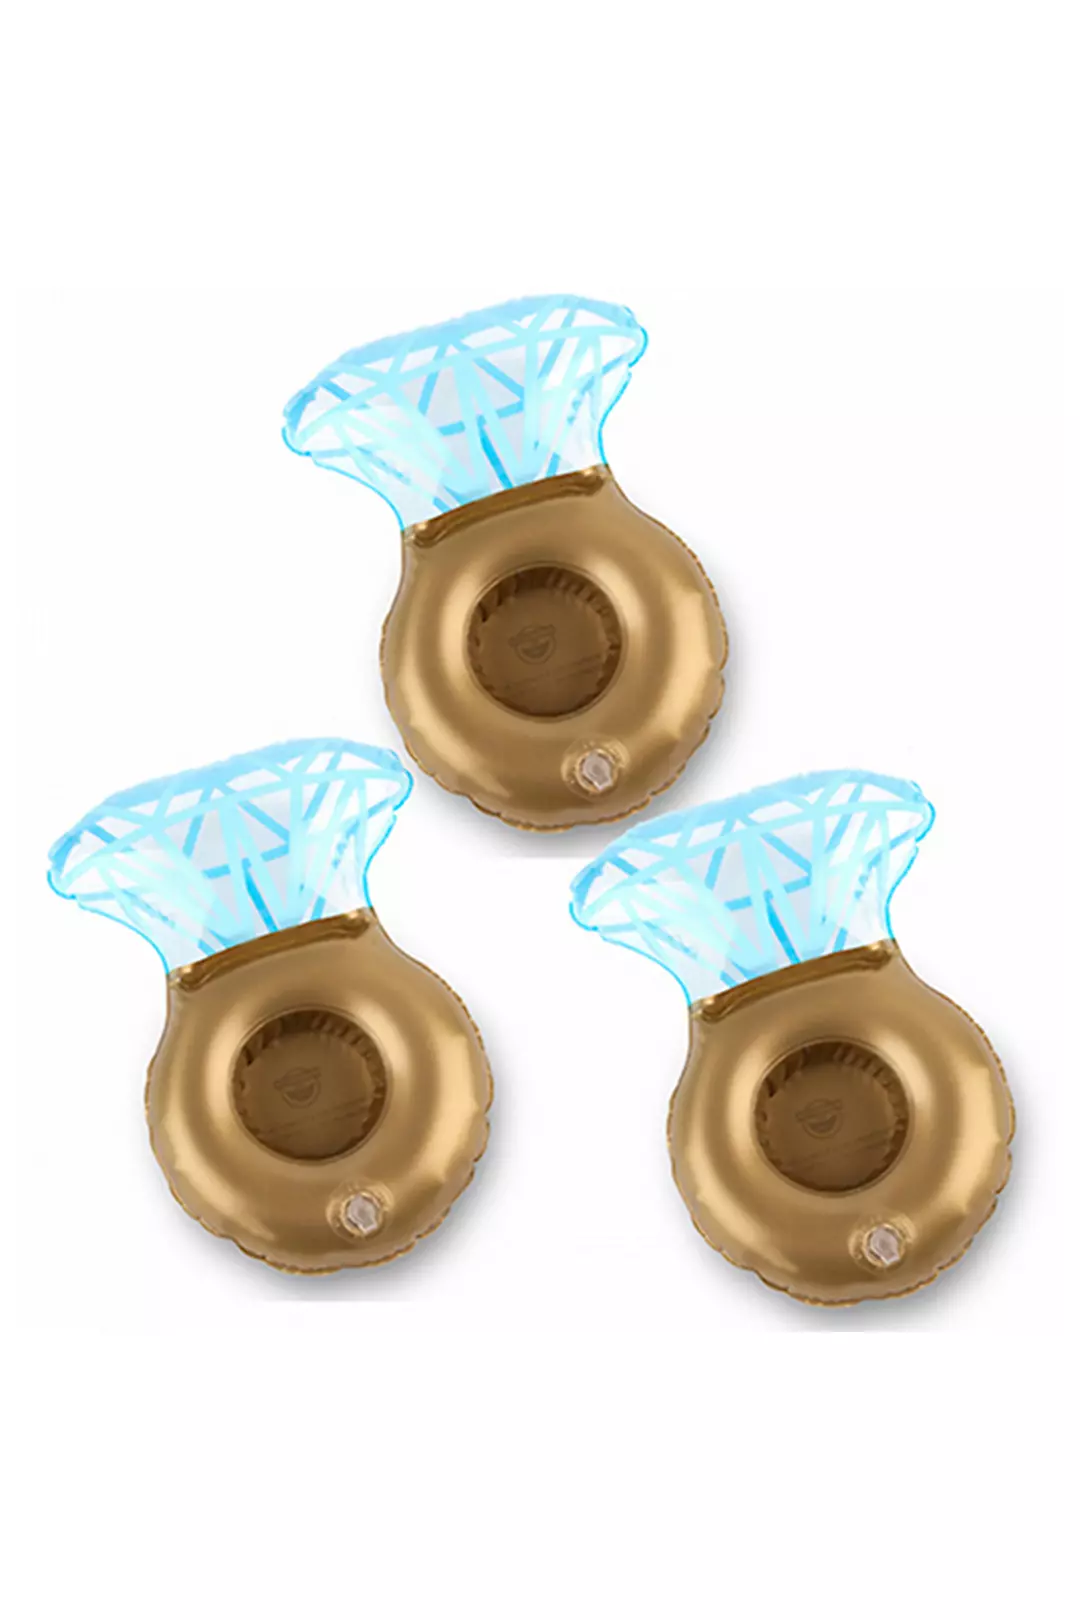 Diamond Ring Drink Float Set of 3 Image